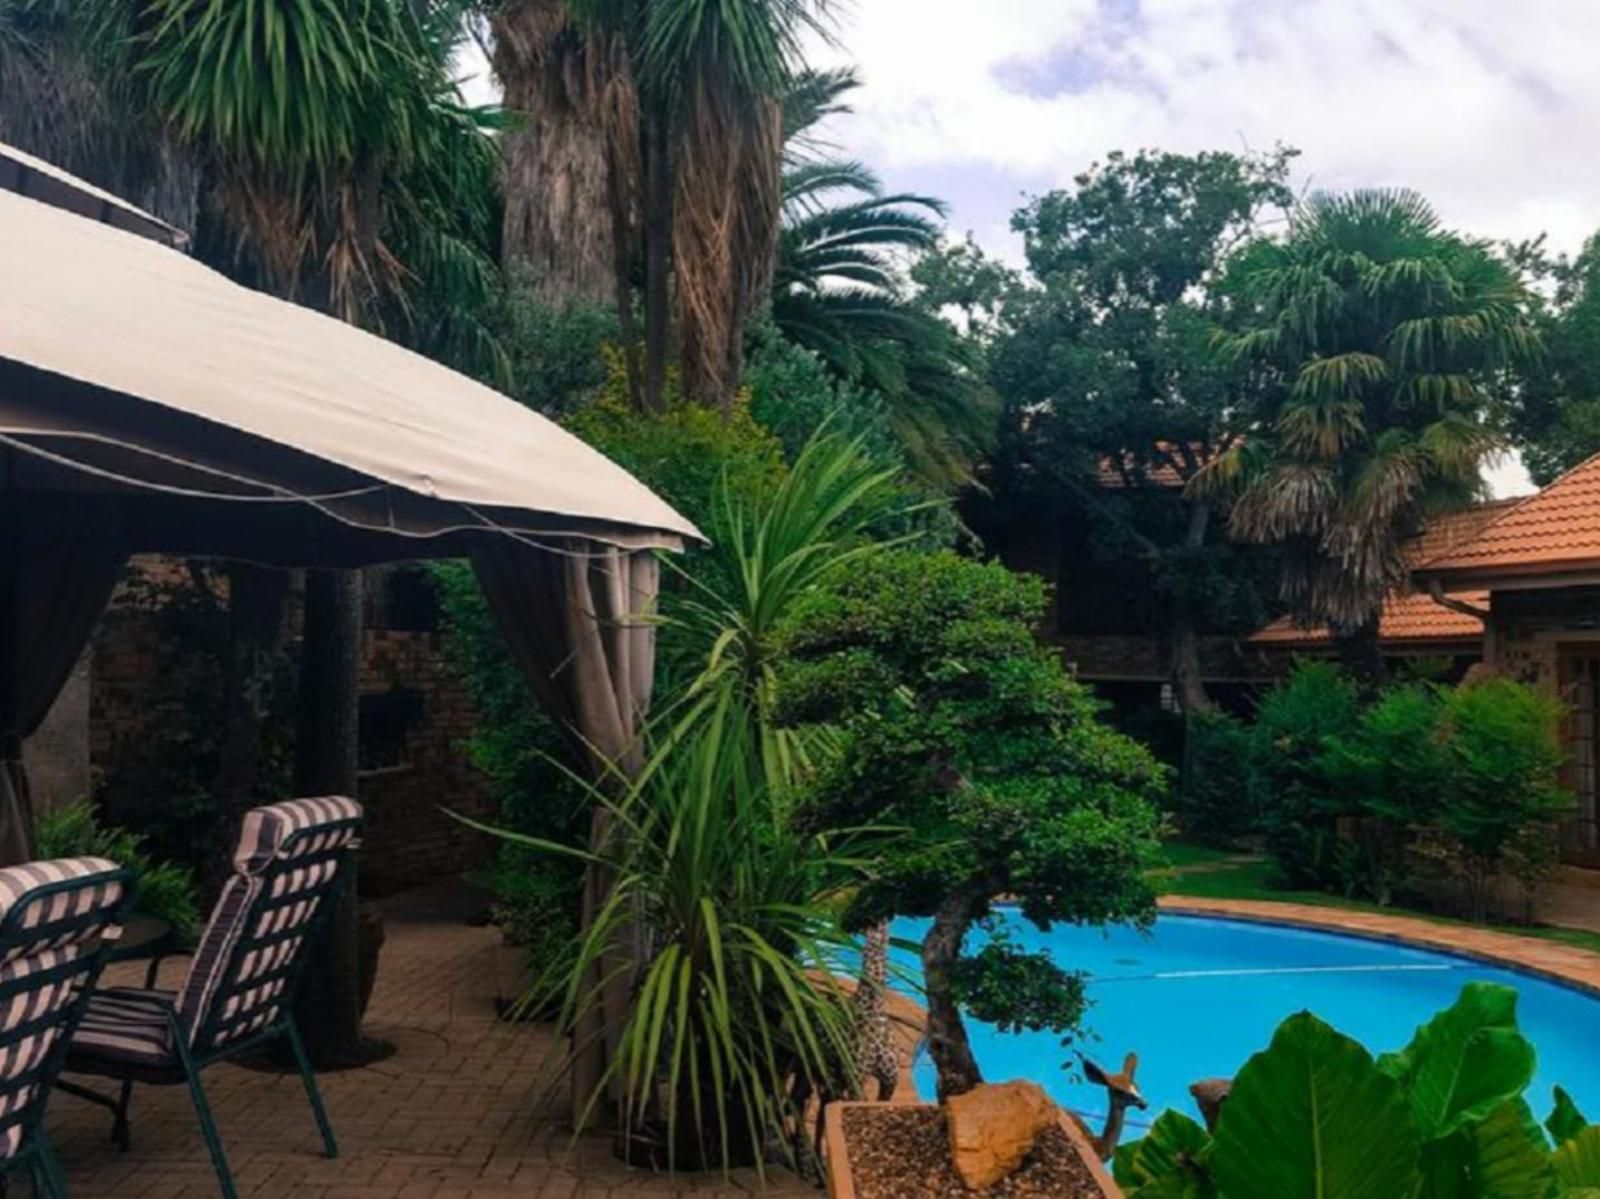 Aark Guest Lodge Vanderbijlpark Gauteng South Africa Palm Tree, Plant, Nature, Wood, Garden, Swimming Pool